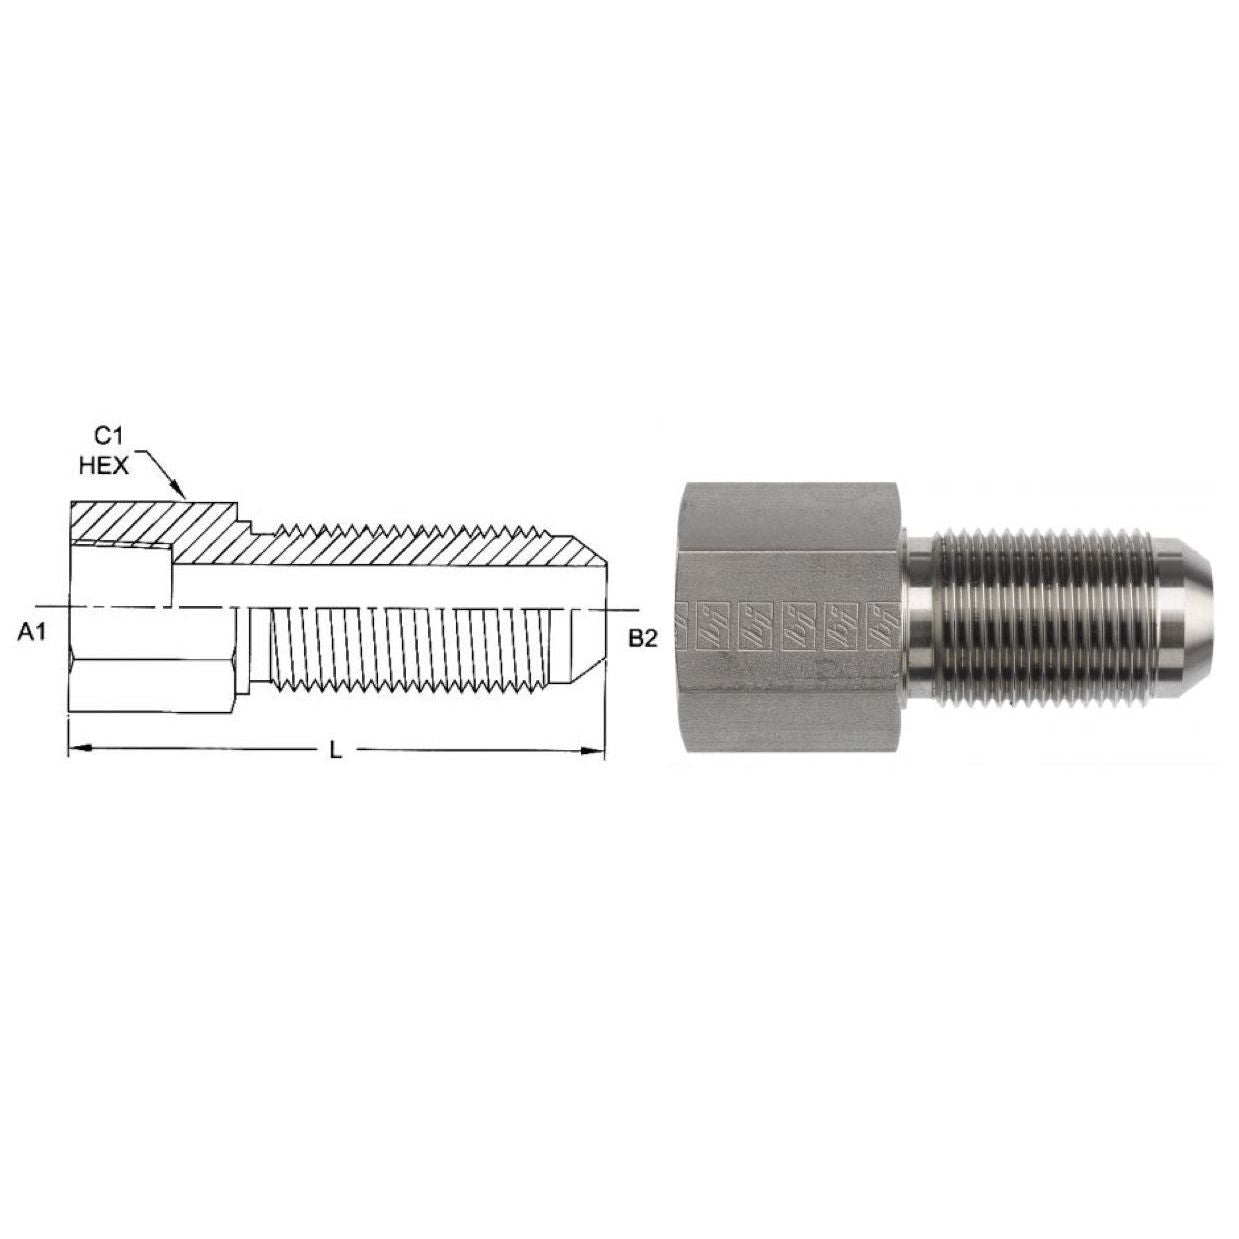 2705-16-16-SS : OneHydraulics Bulkhead Adapter, Straight, 1" JIC JIC x 1" Male, Stainless Steel, 3600psi